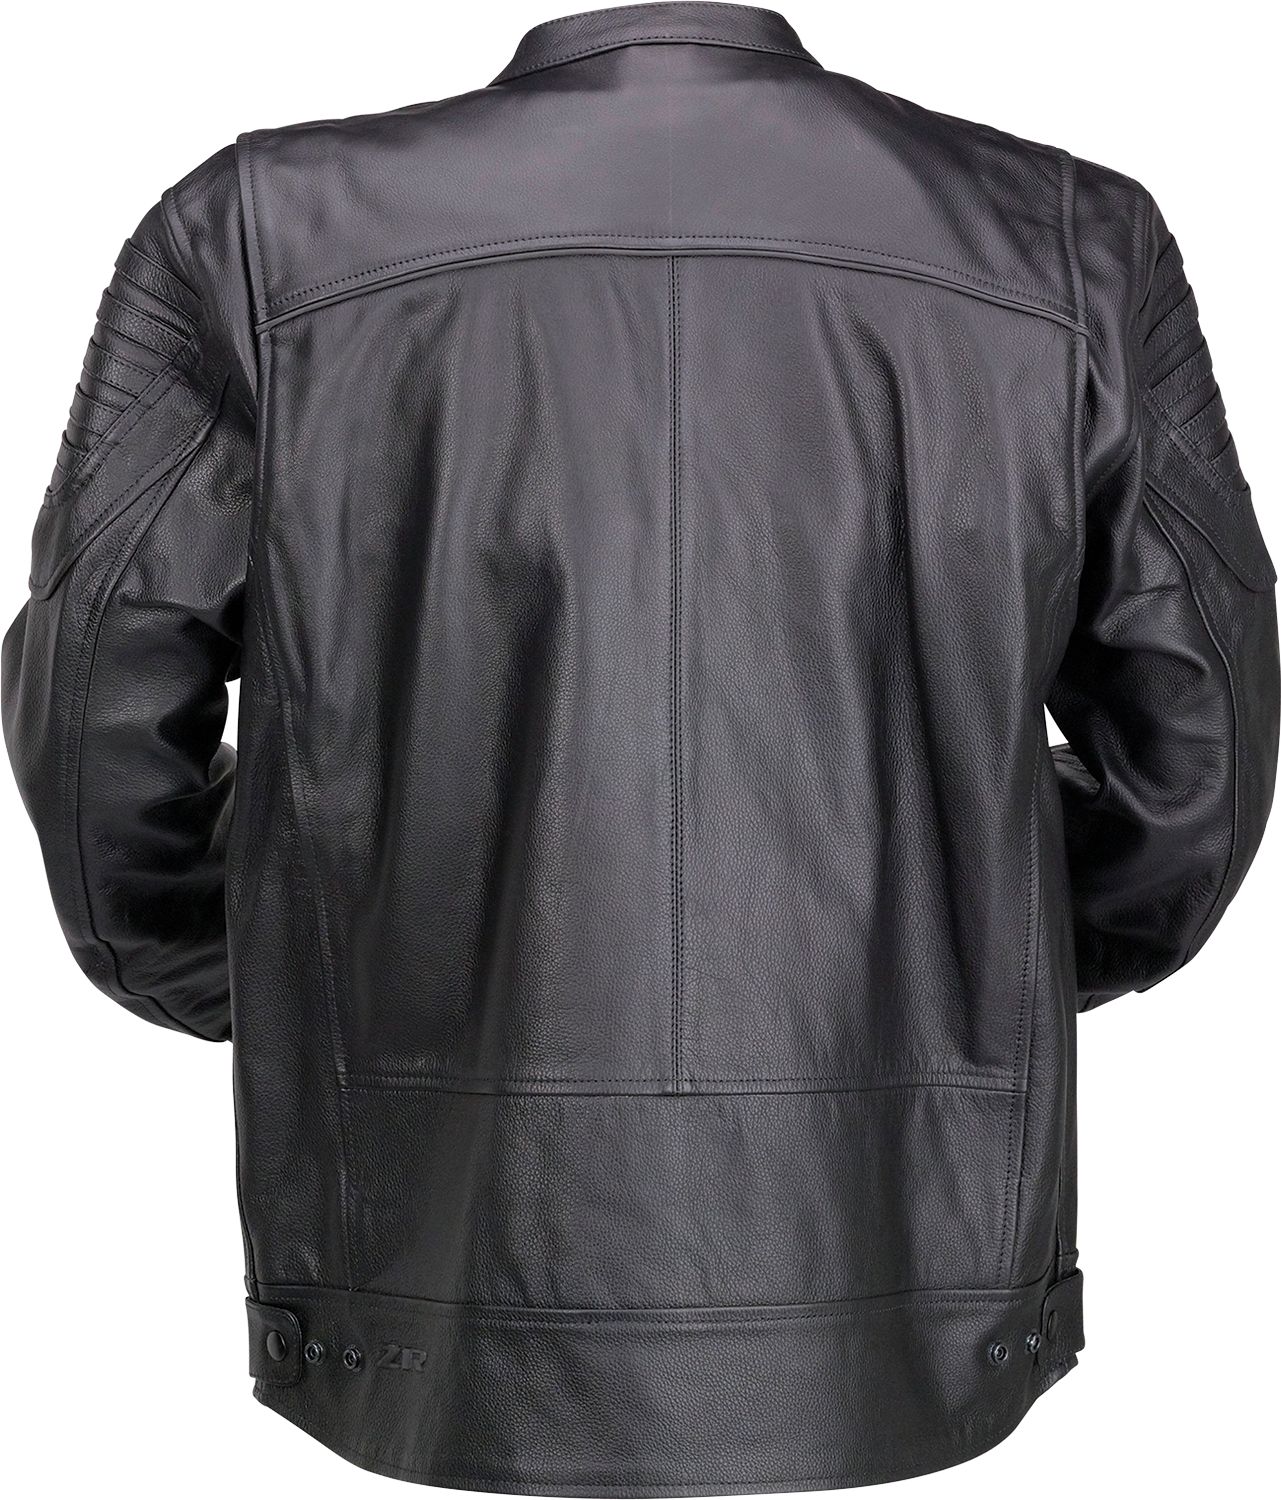 Z1R Widower Leather Jacket - Black - Medium 2810-3970